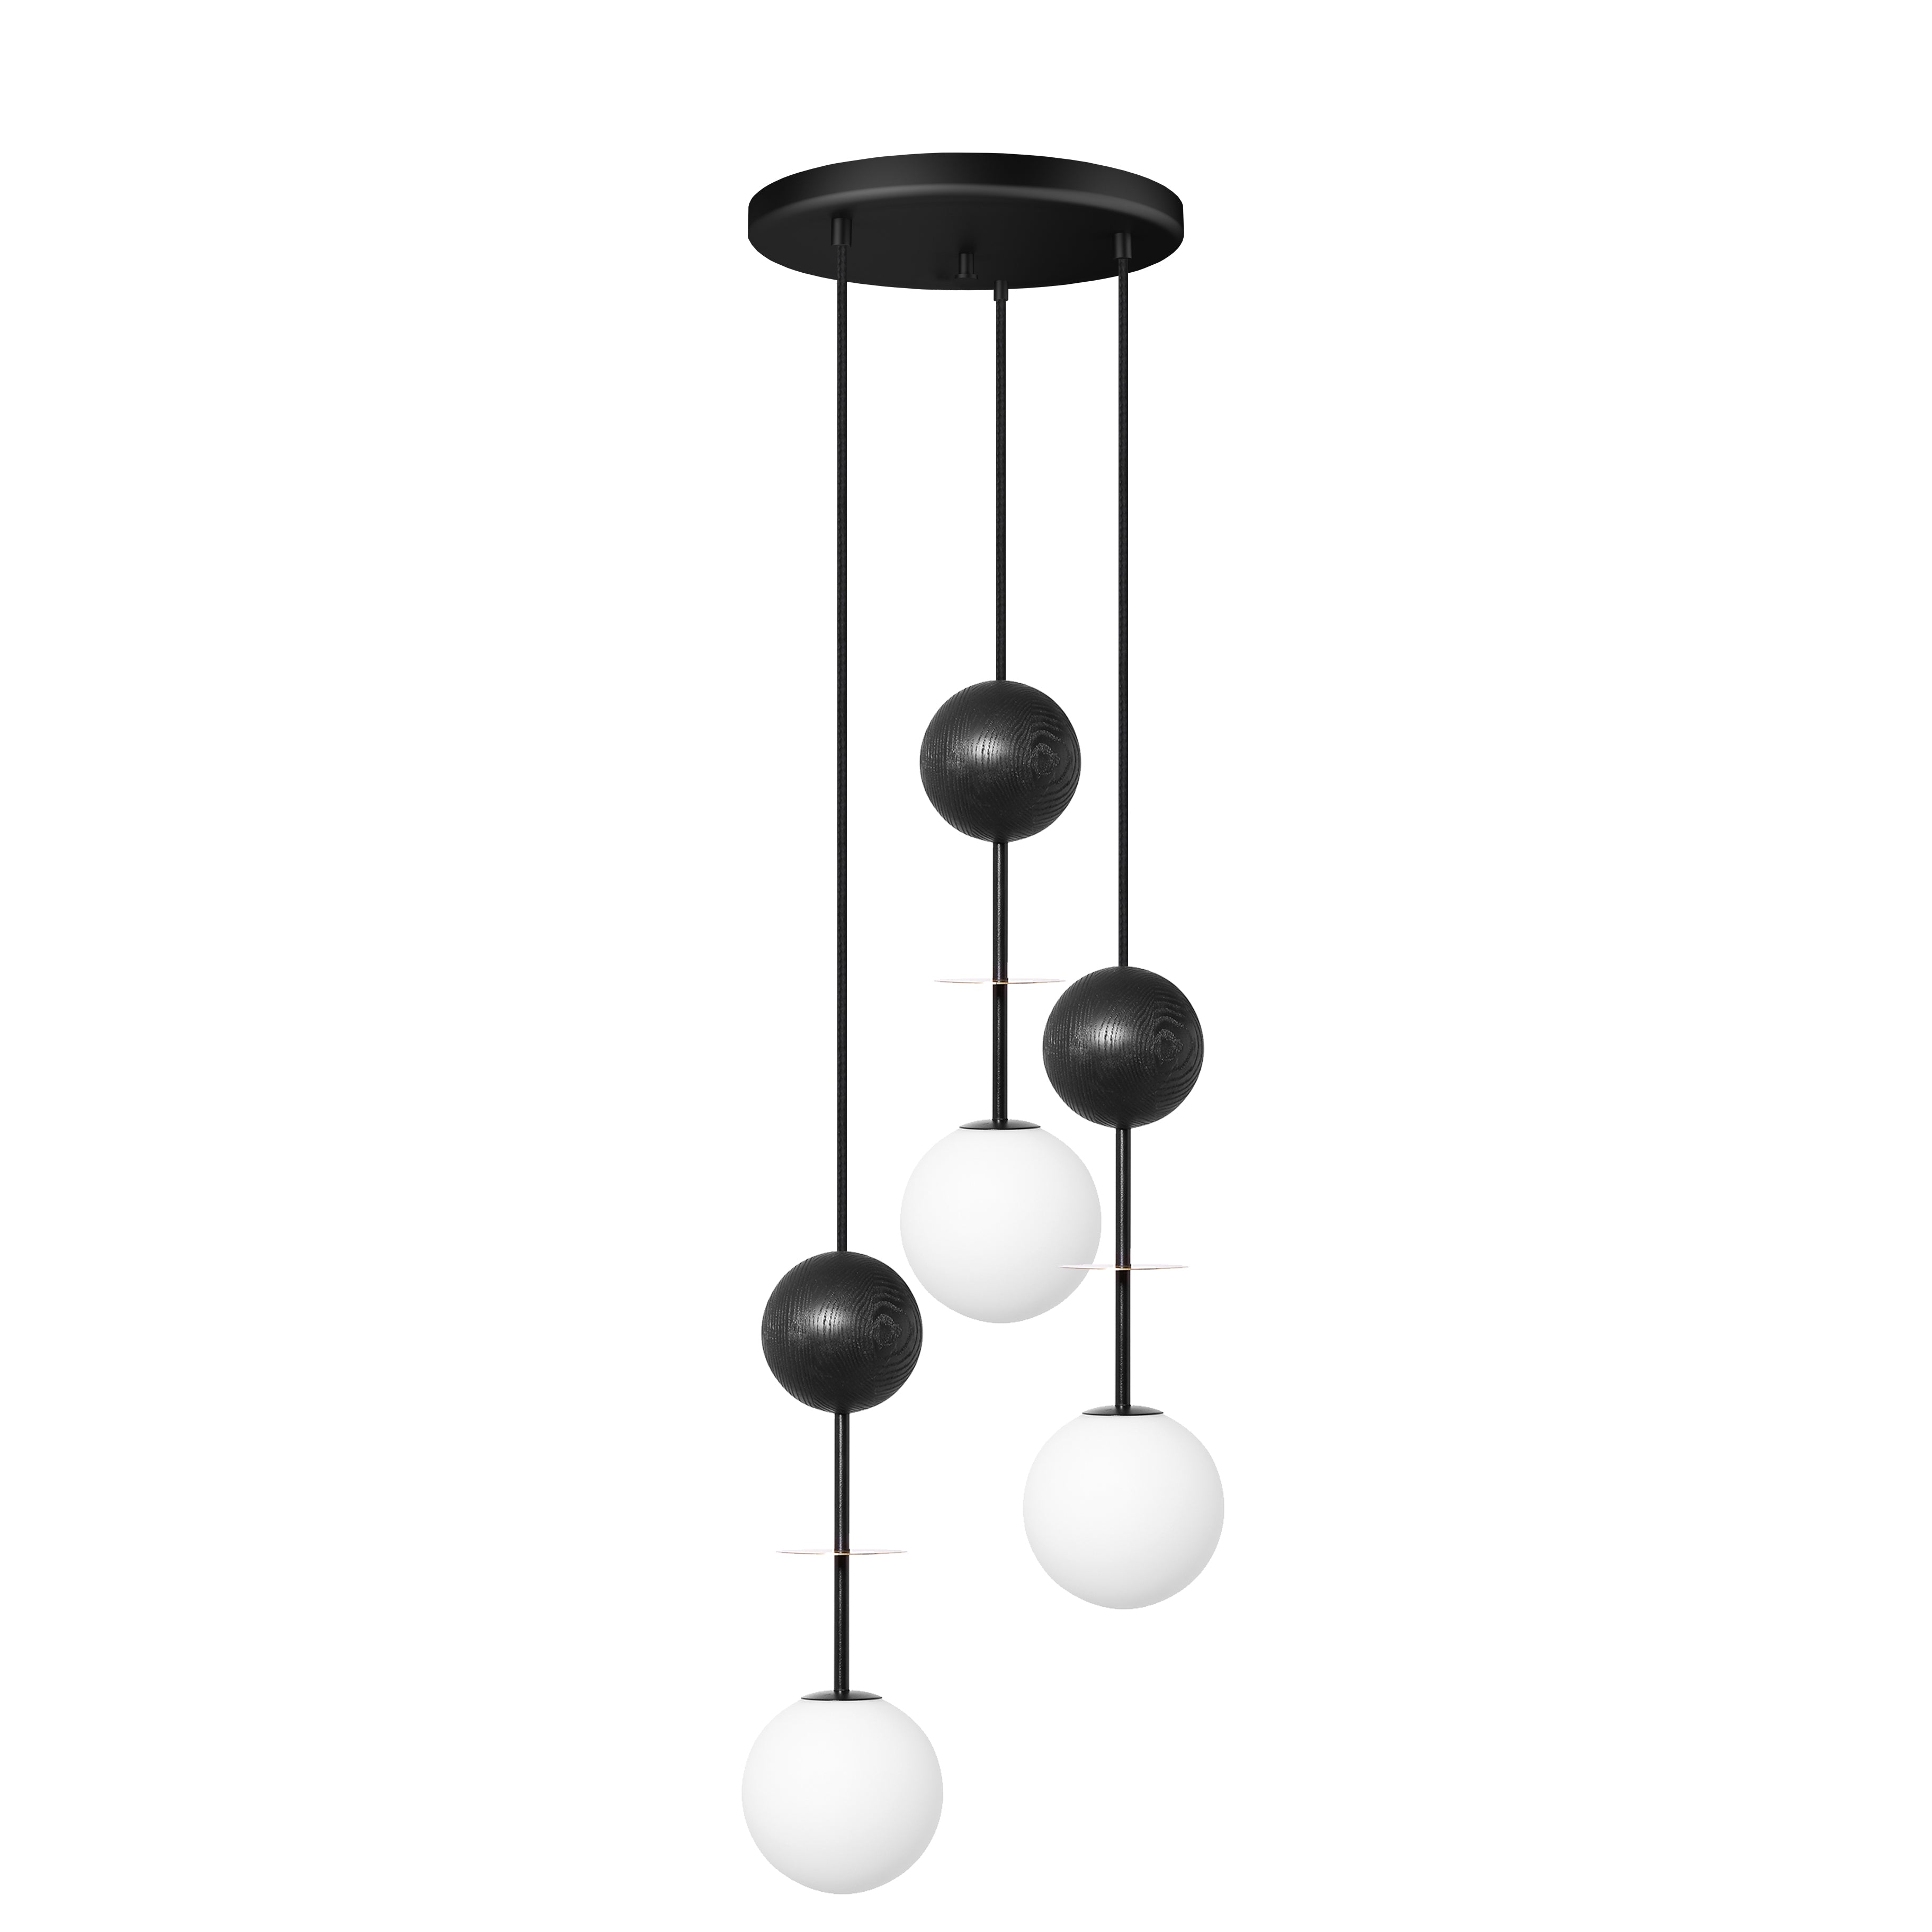 OIO A 3P Black Triple Ceiling Lamp / Plafond med mässing